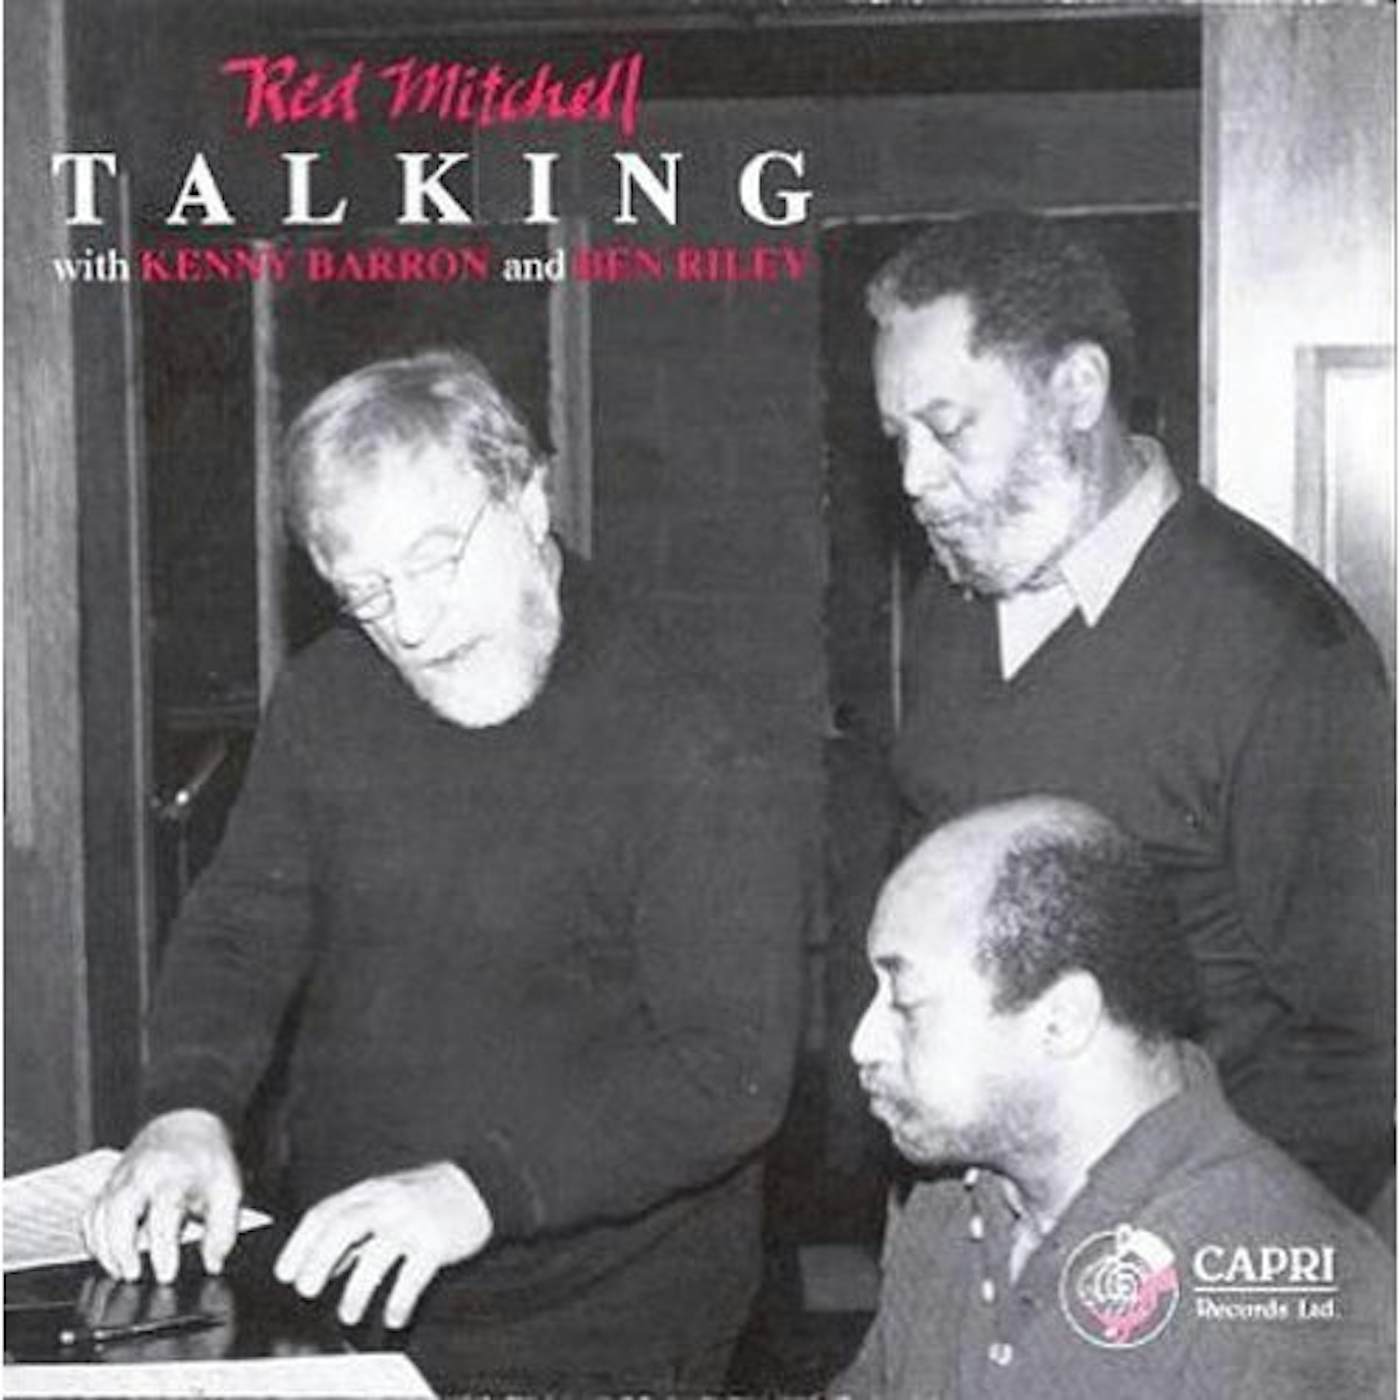 Red Mitchell TALKING CD